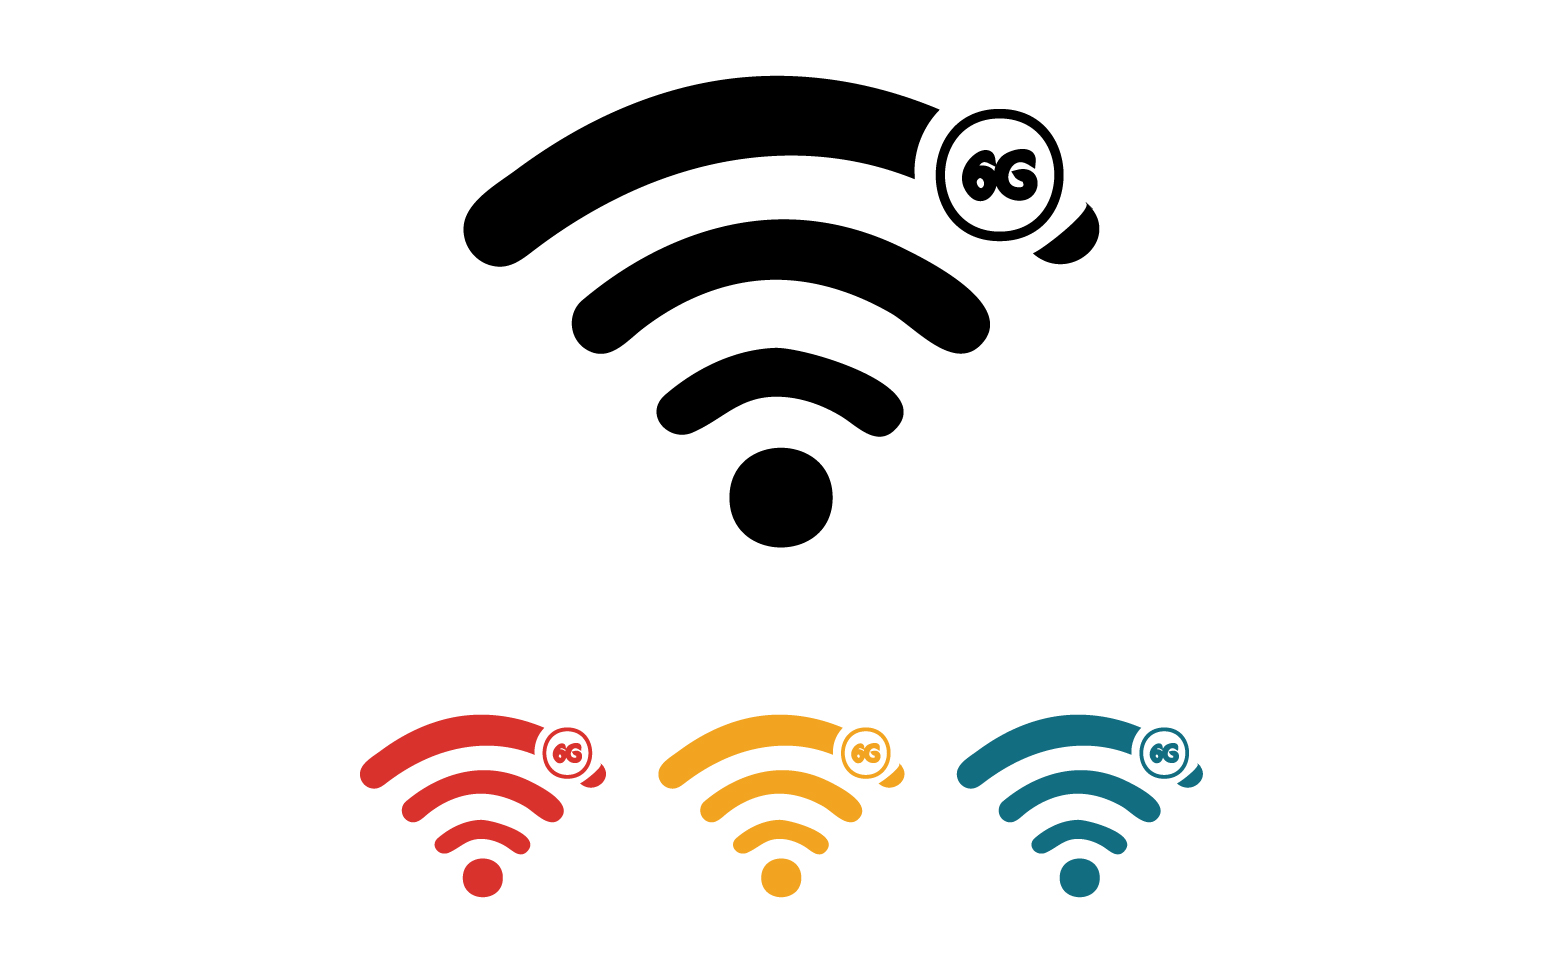 6G signal network tecknology logo vector icon v19